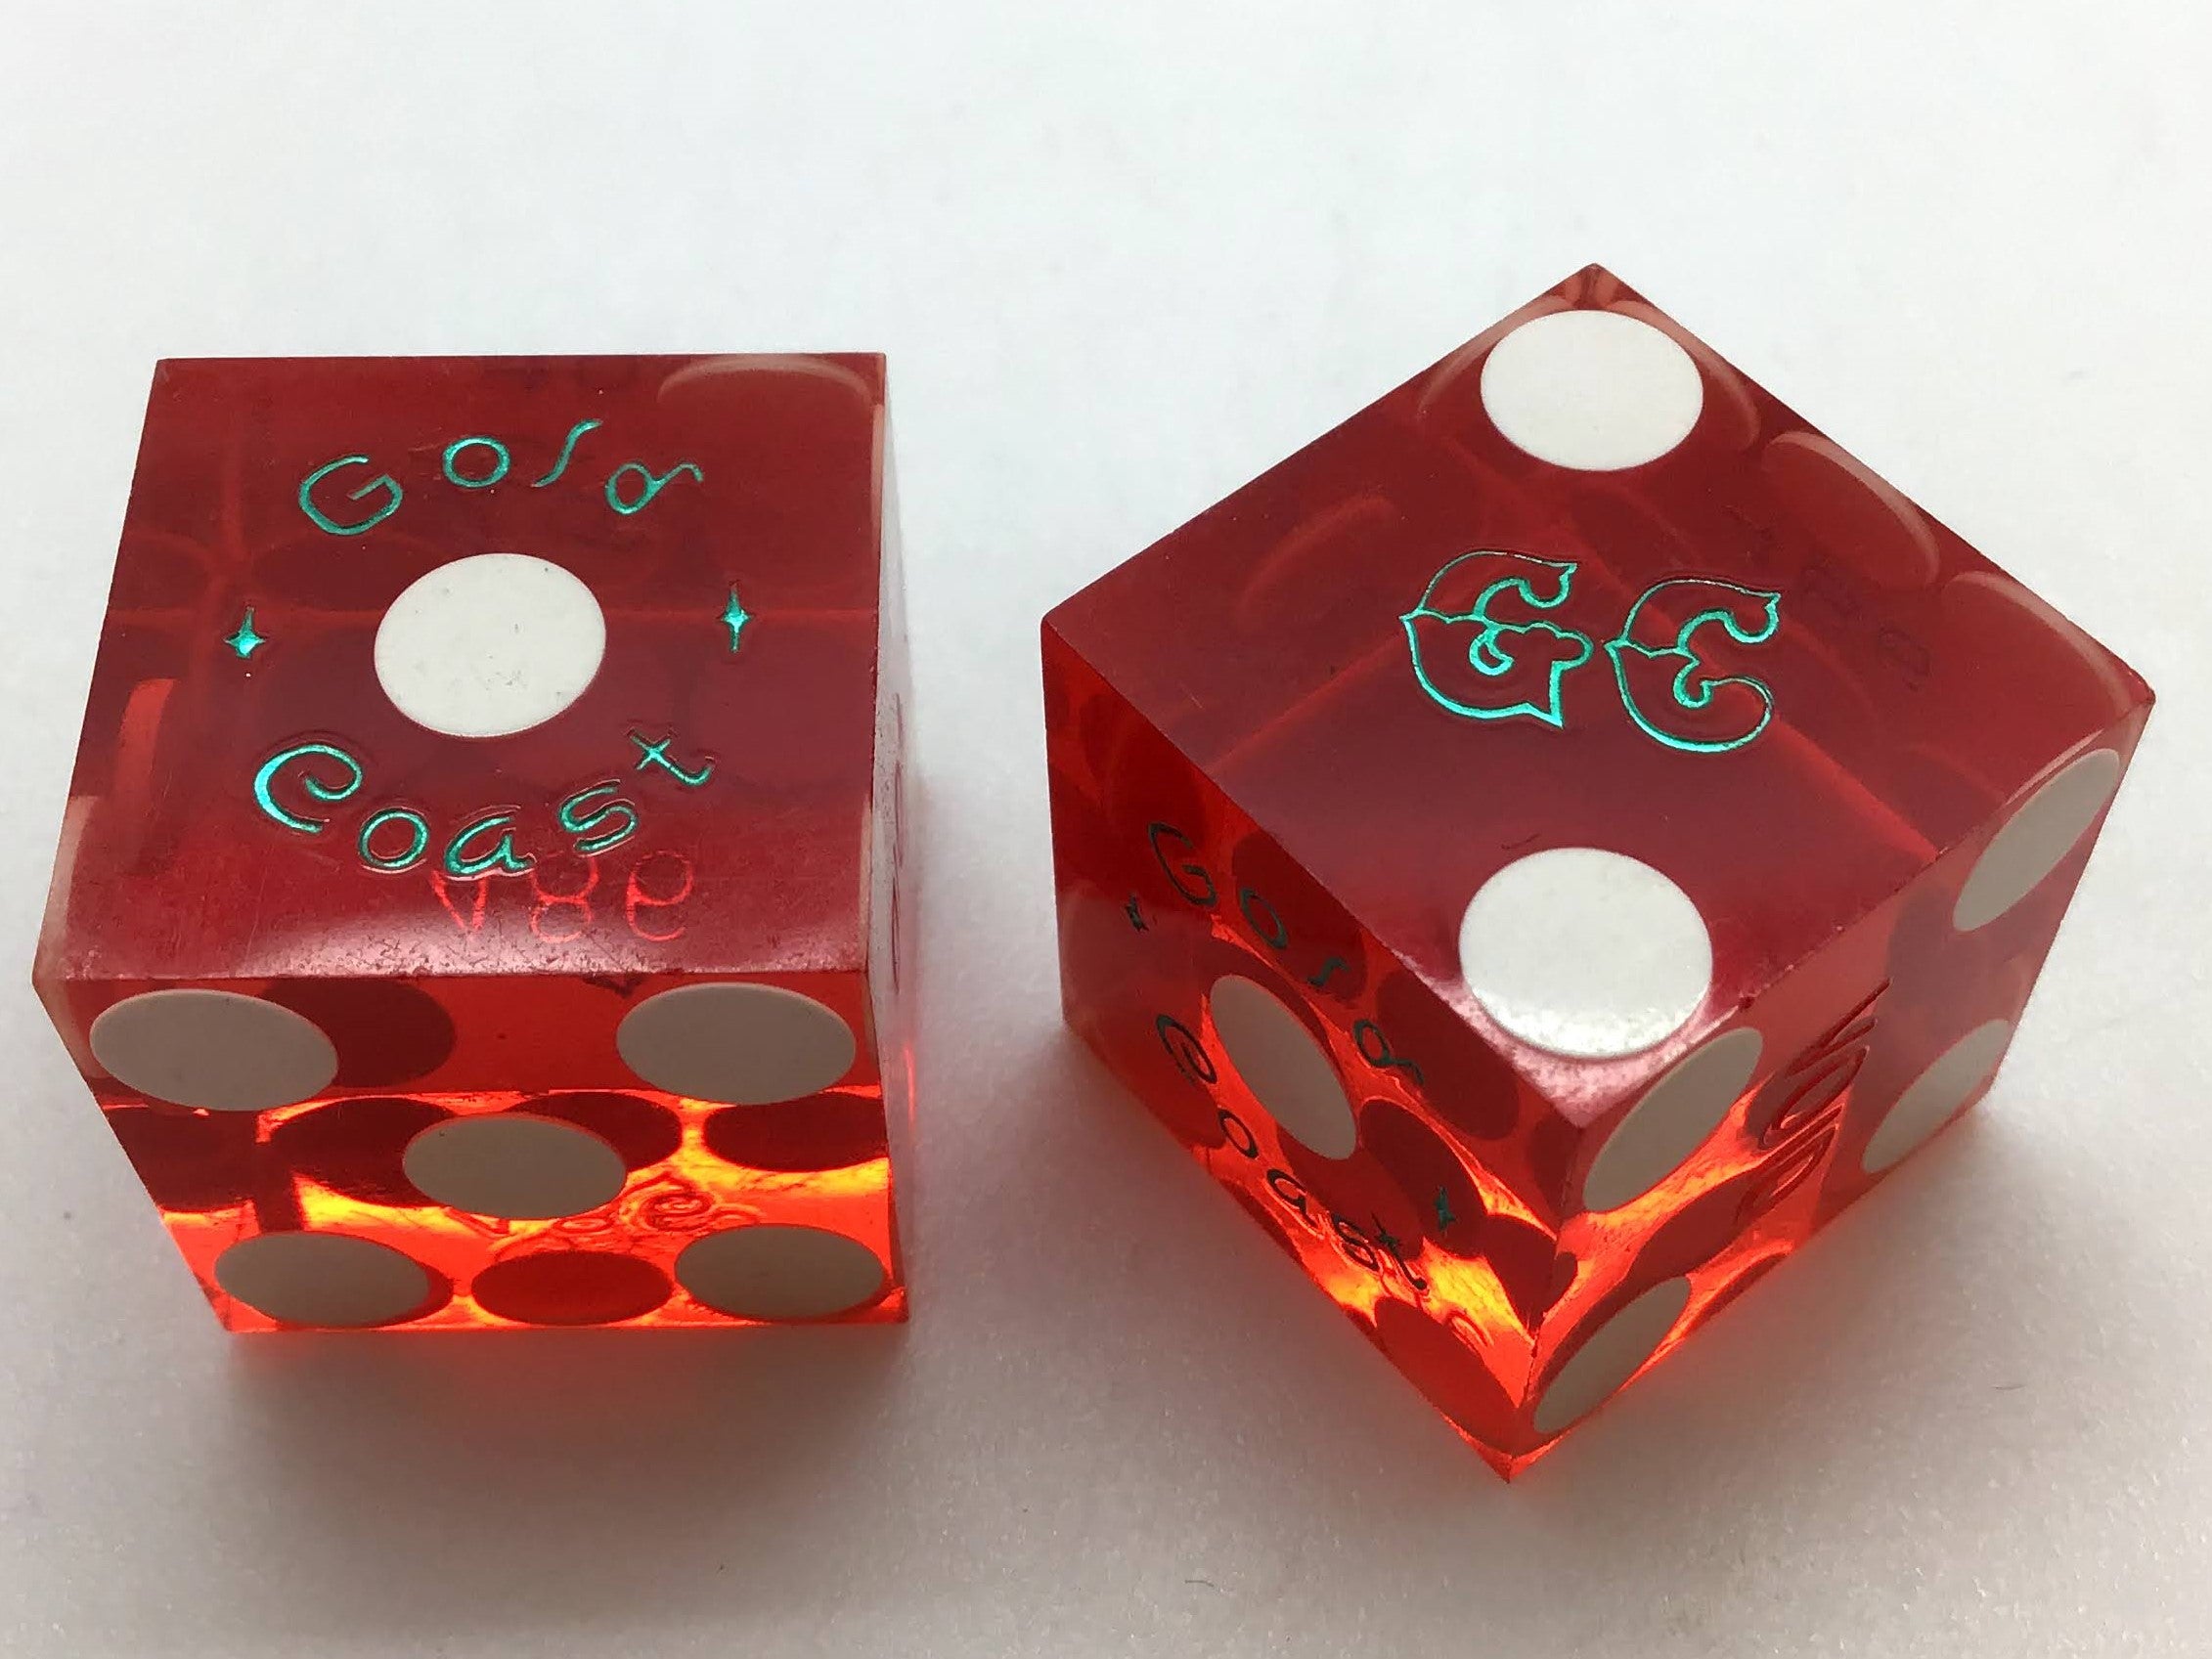 100 red dice club pogo